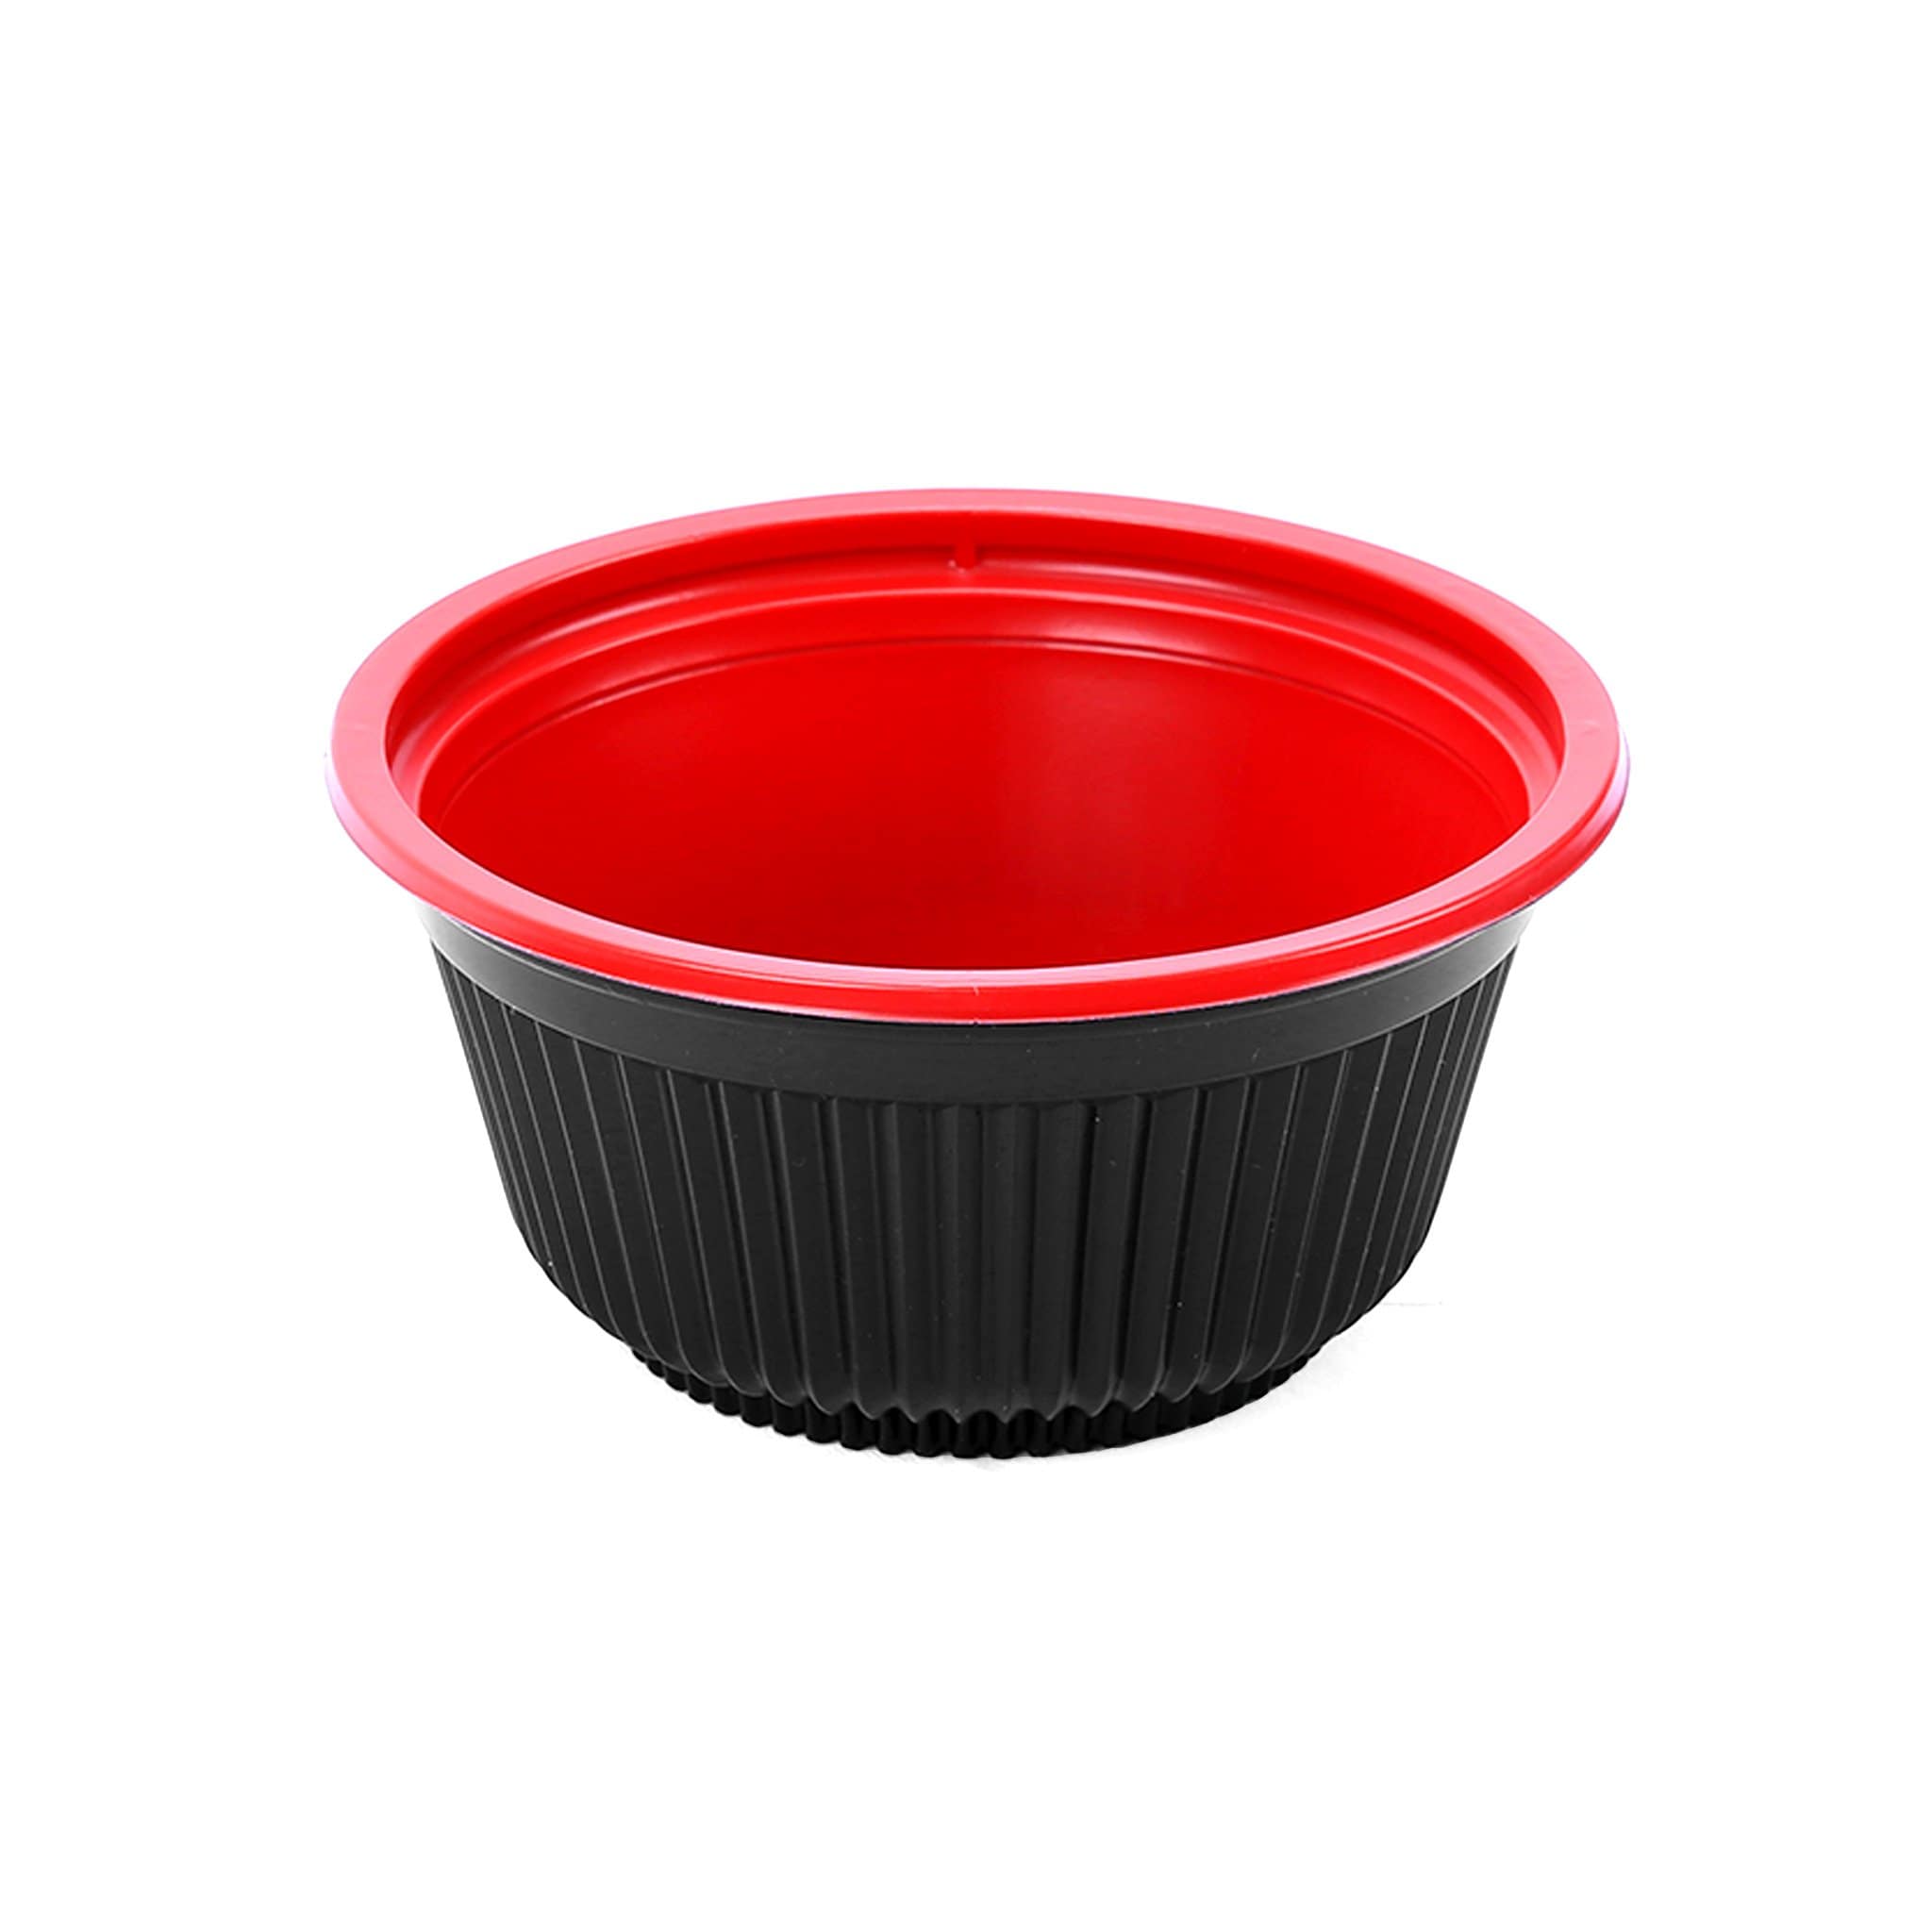 Red & Black Soup Bowl 550 Cc With Lids